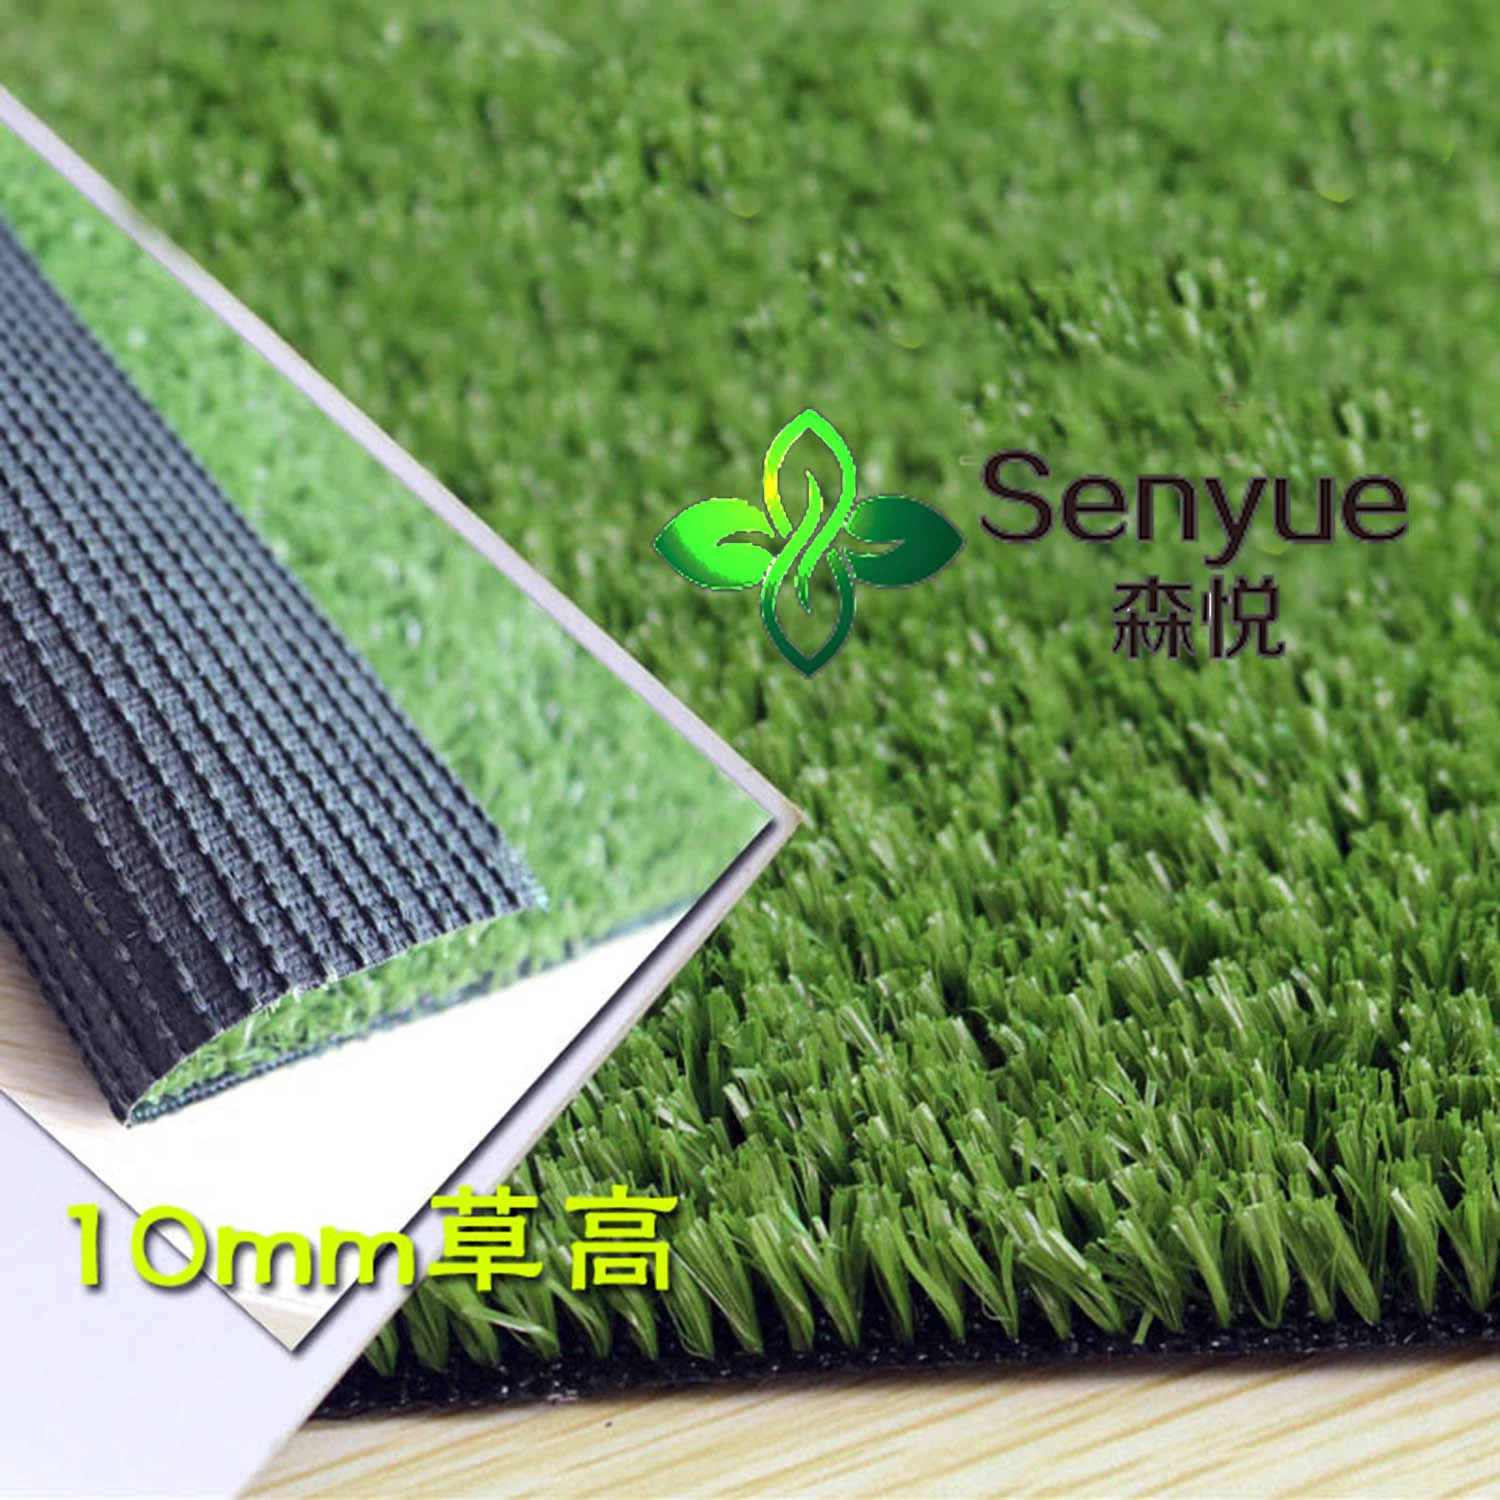 Senyue 10mm Artificial Grass Turf for Construction Site